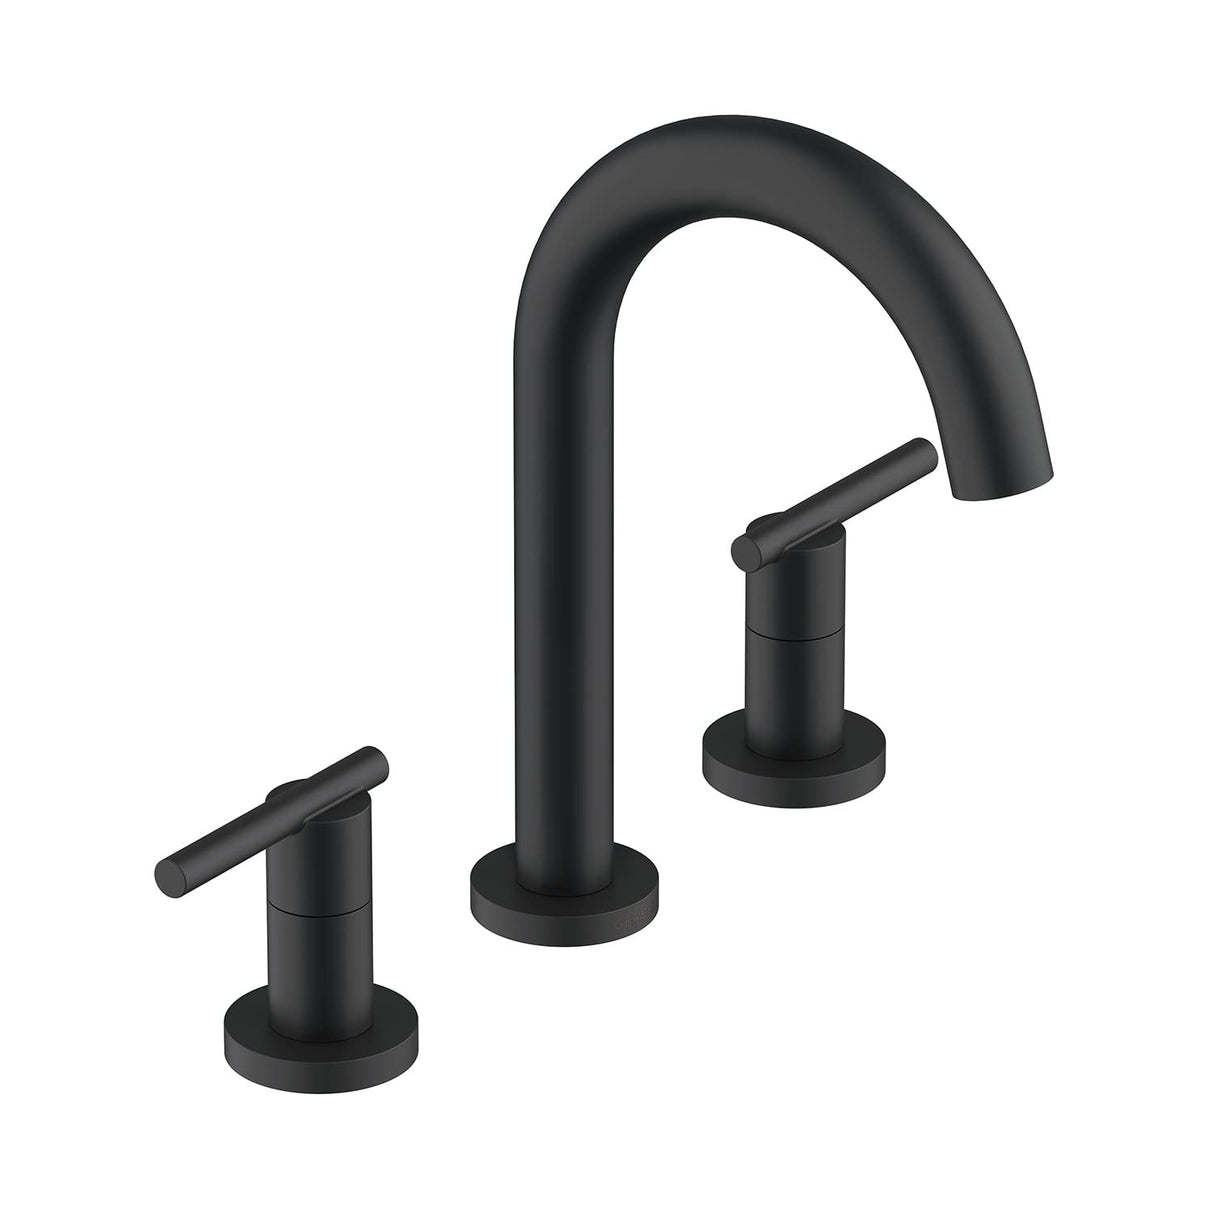 Gerber D303658BS Parma Two Handle Widespread Lavatory Faucet - Satin Black